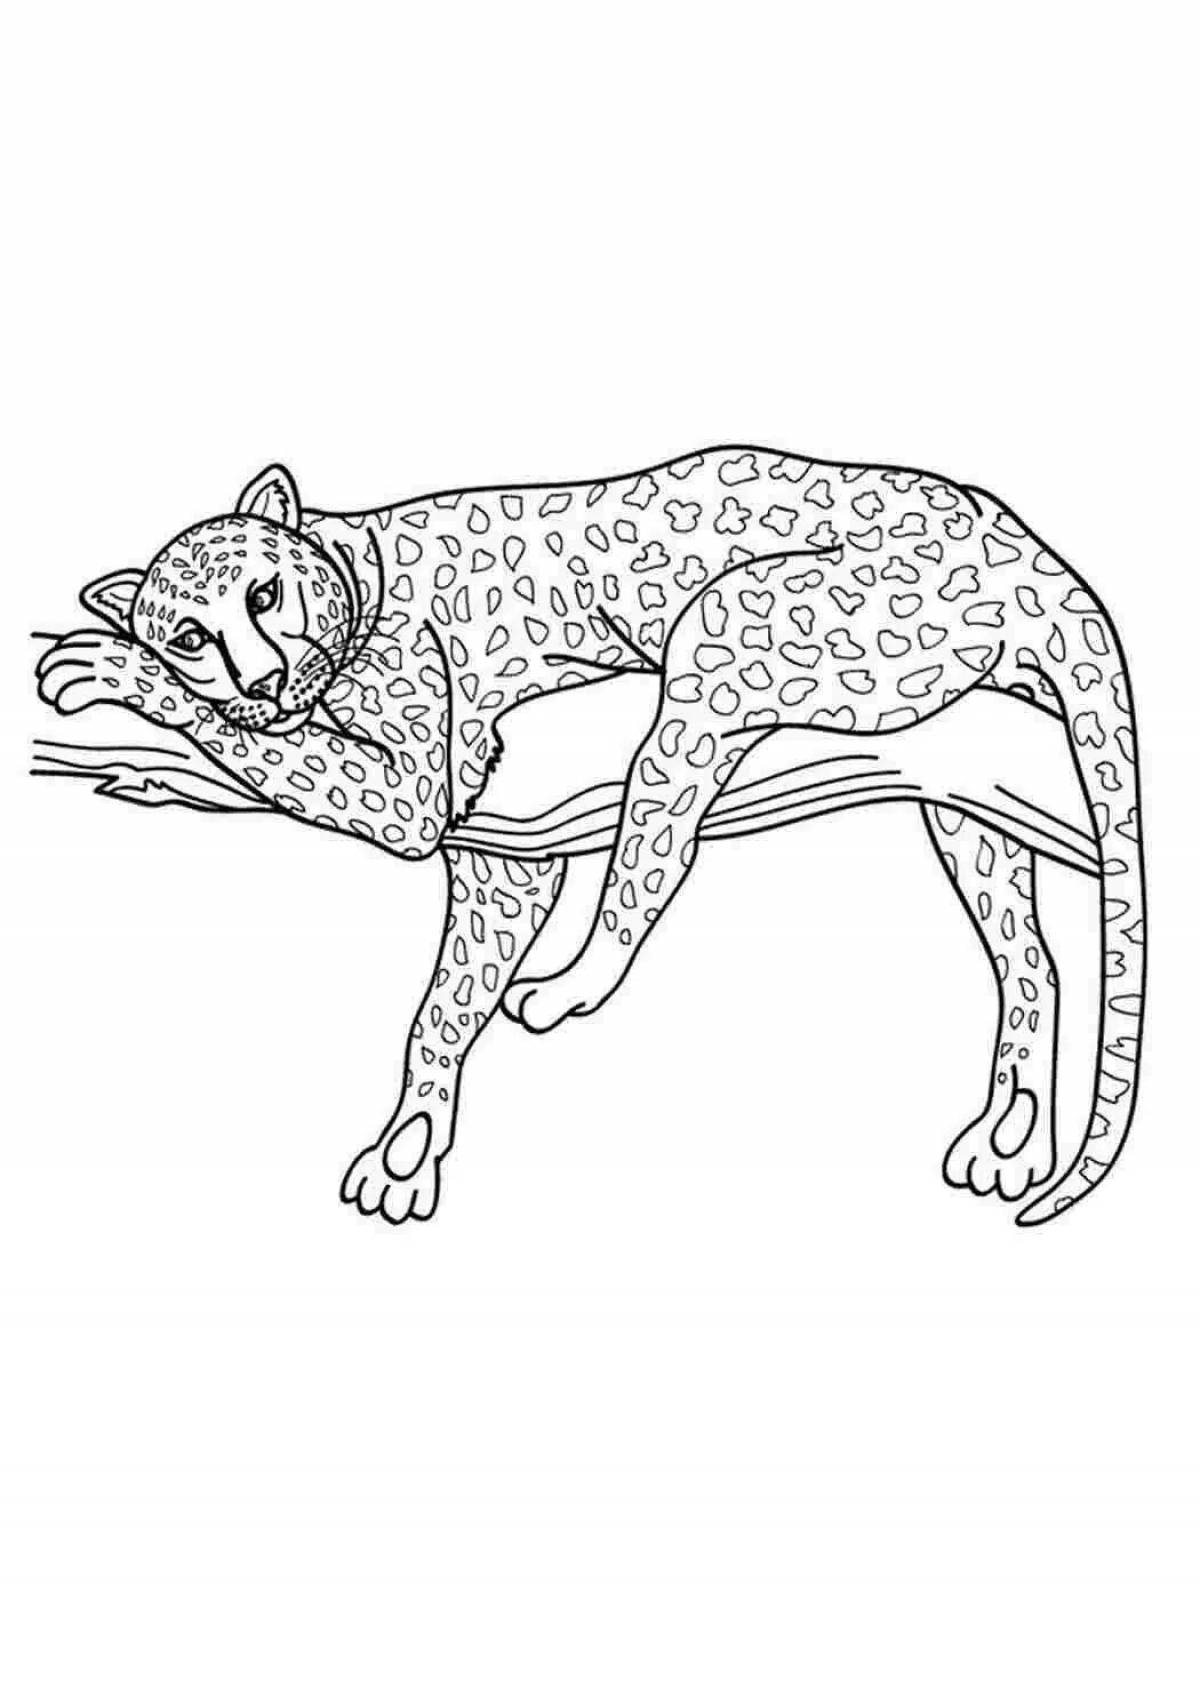 Coloring page gorgeous leopard cat